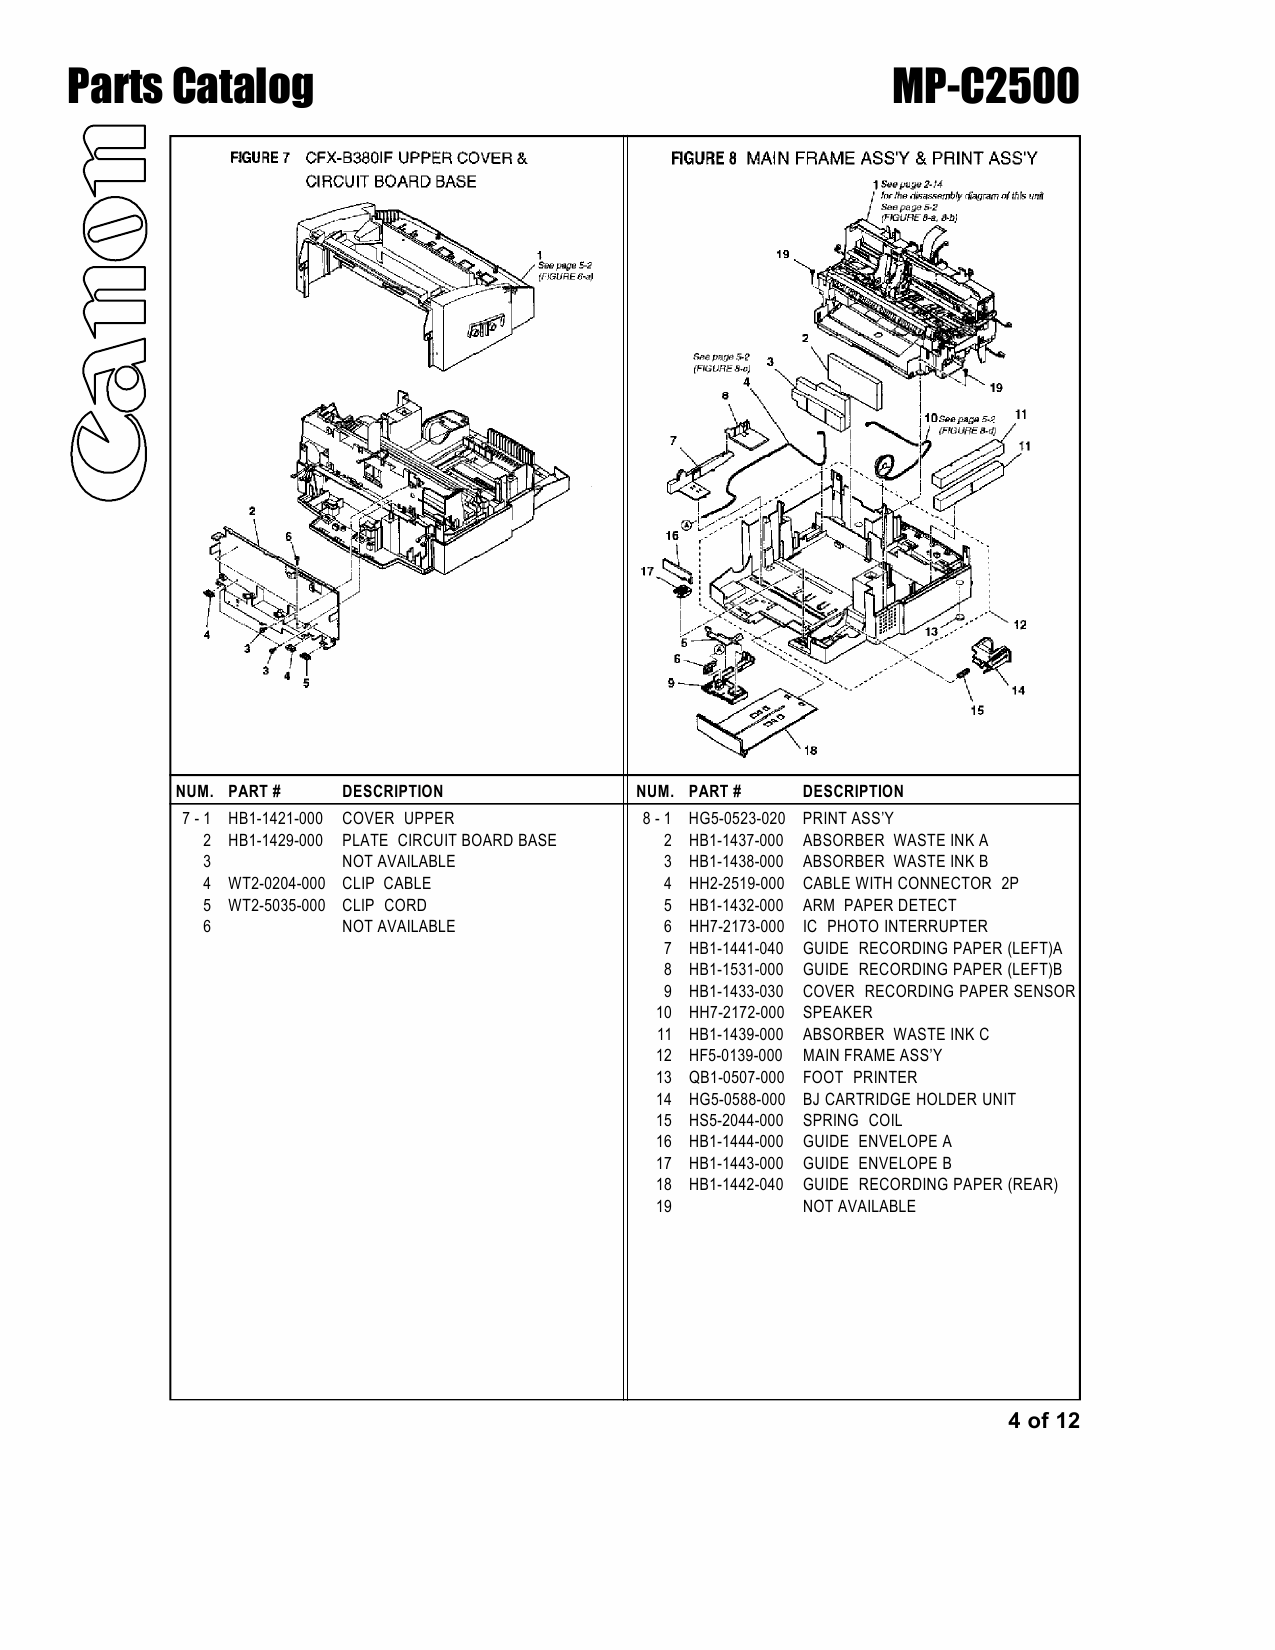 Canon MultiPASS MP-C2500 Parts Catalog Manual-4